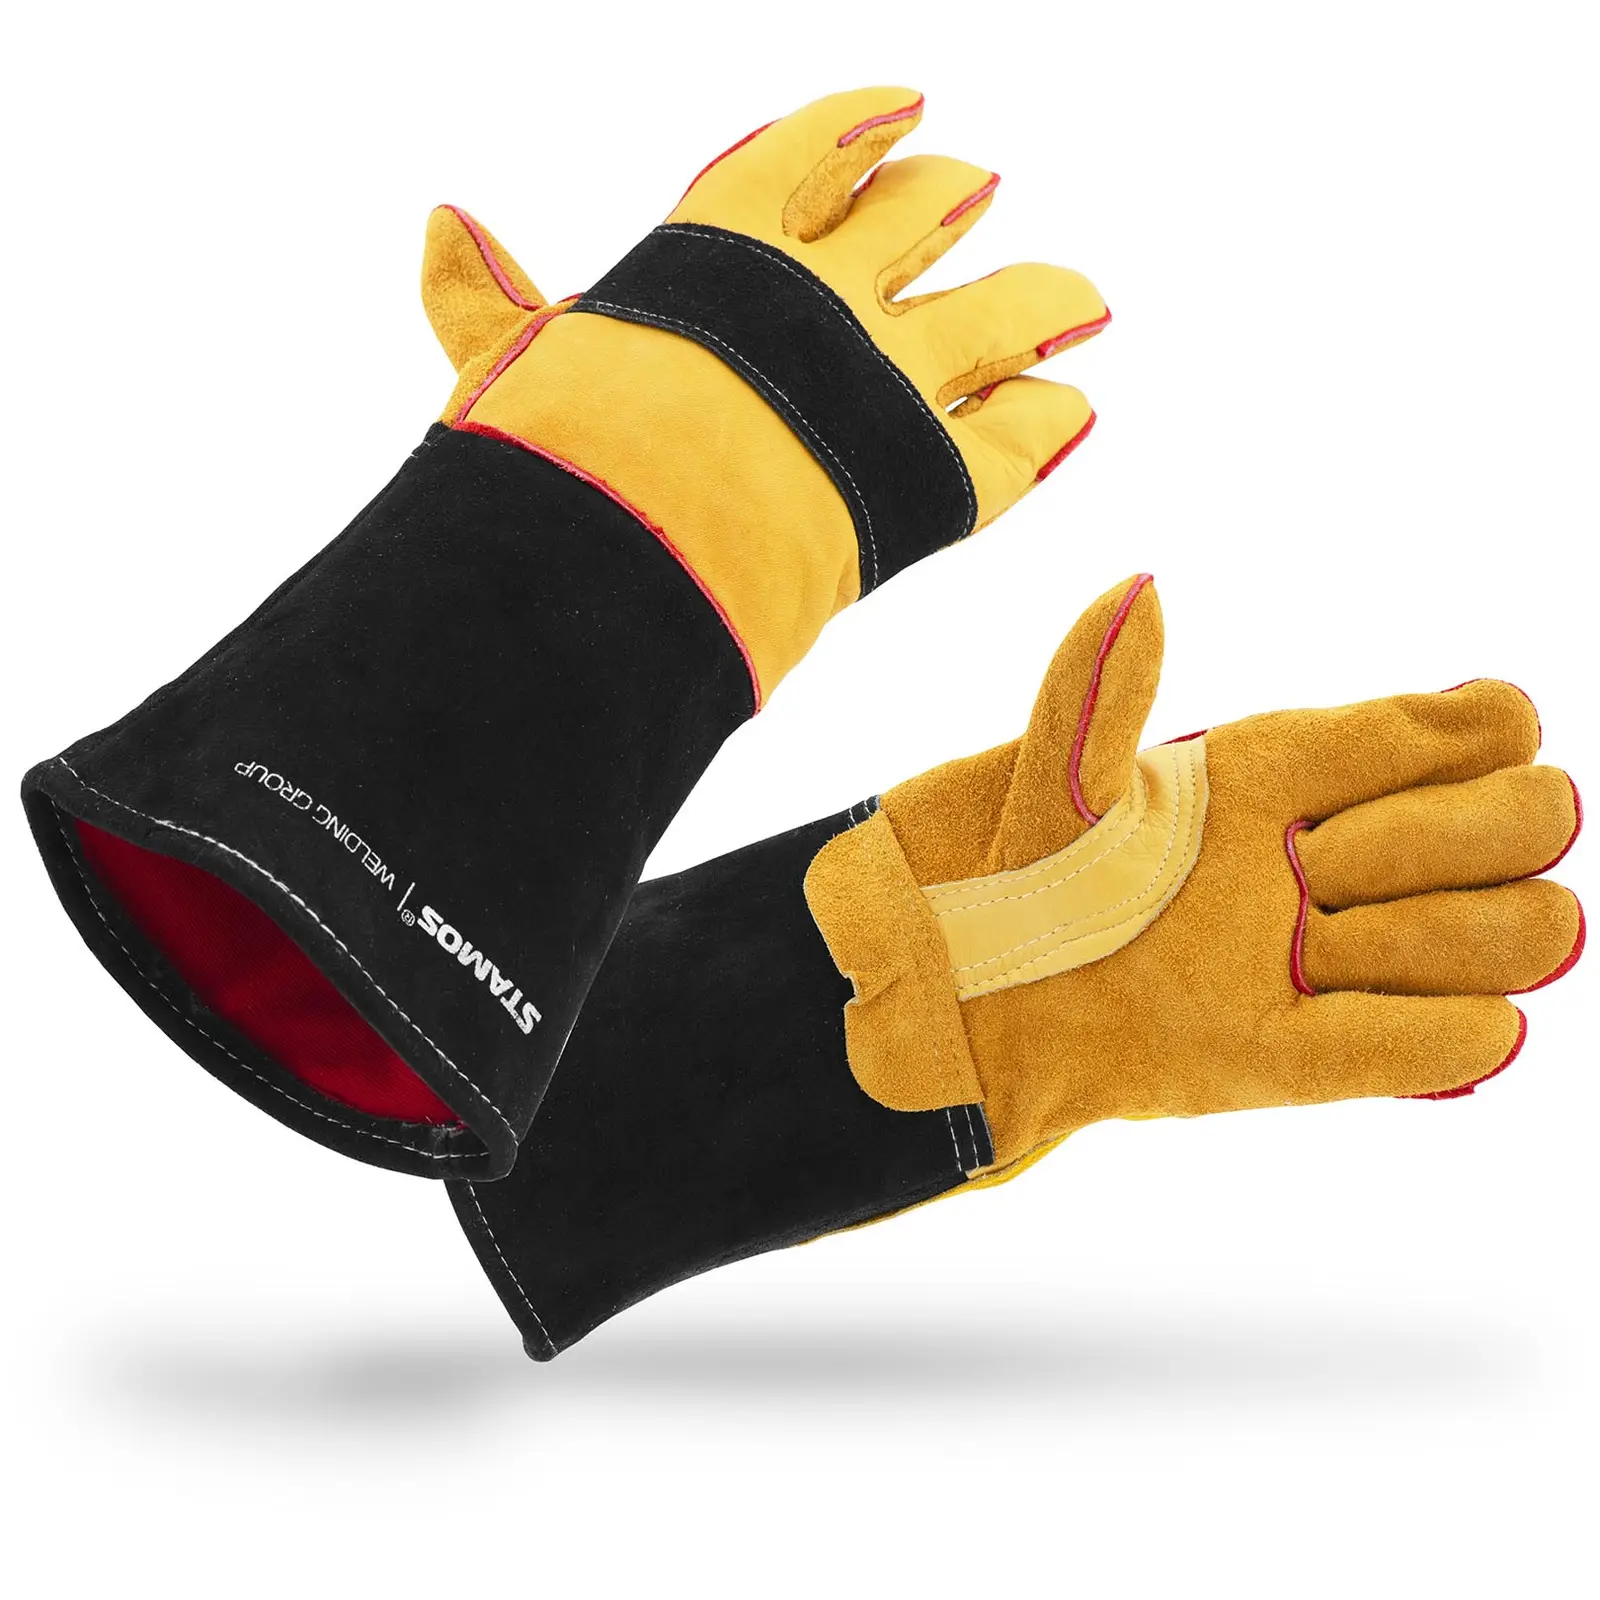 Ръкавици за заваряване - размер М